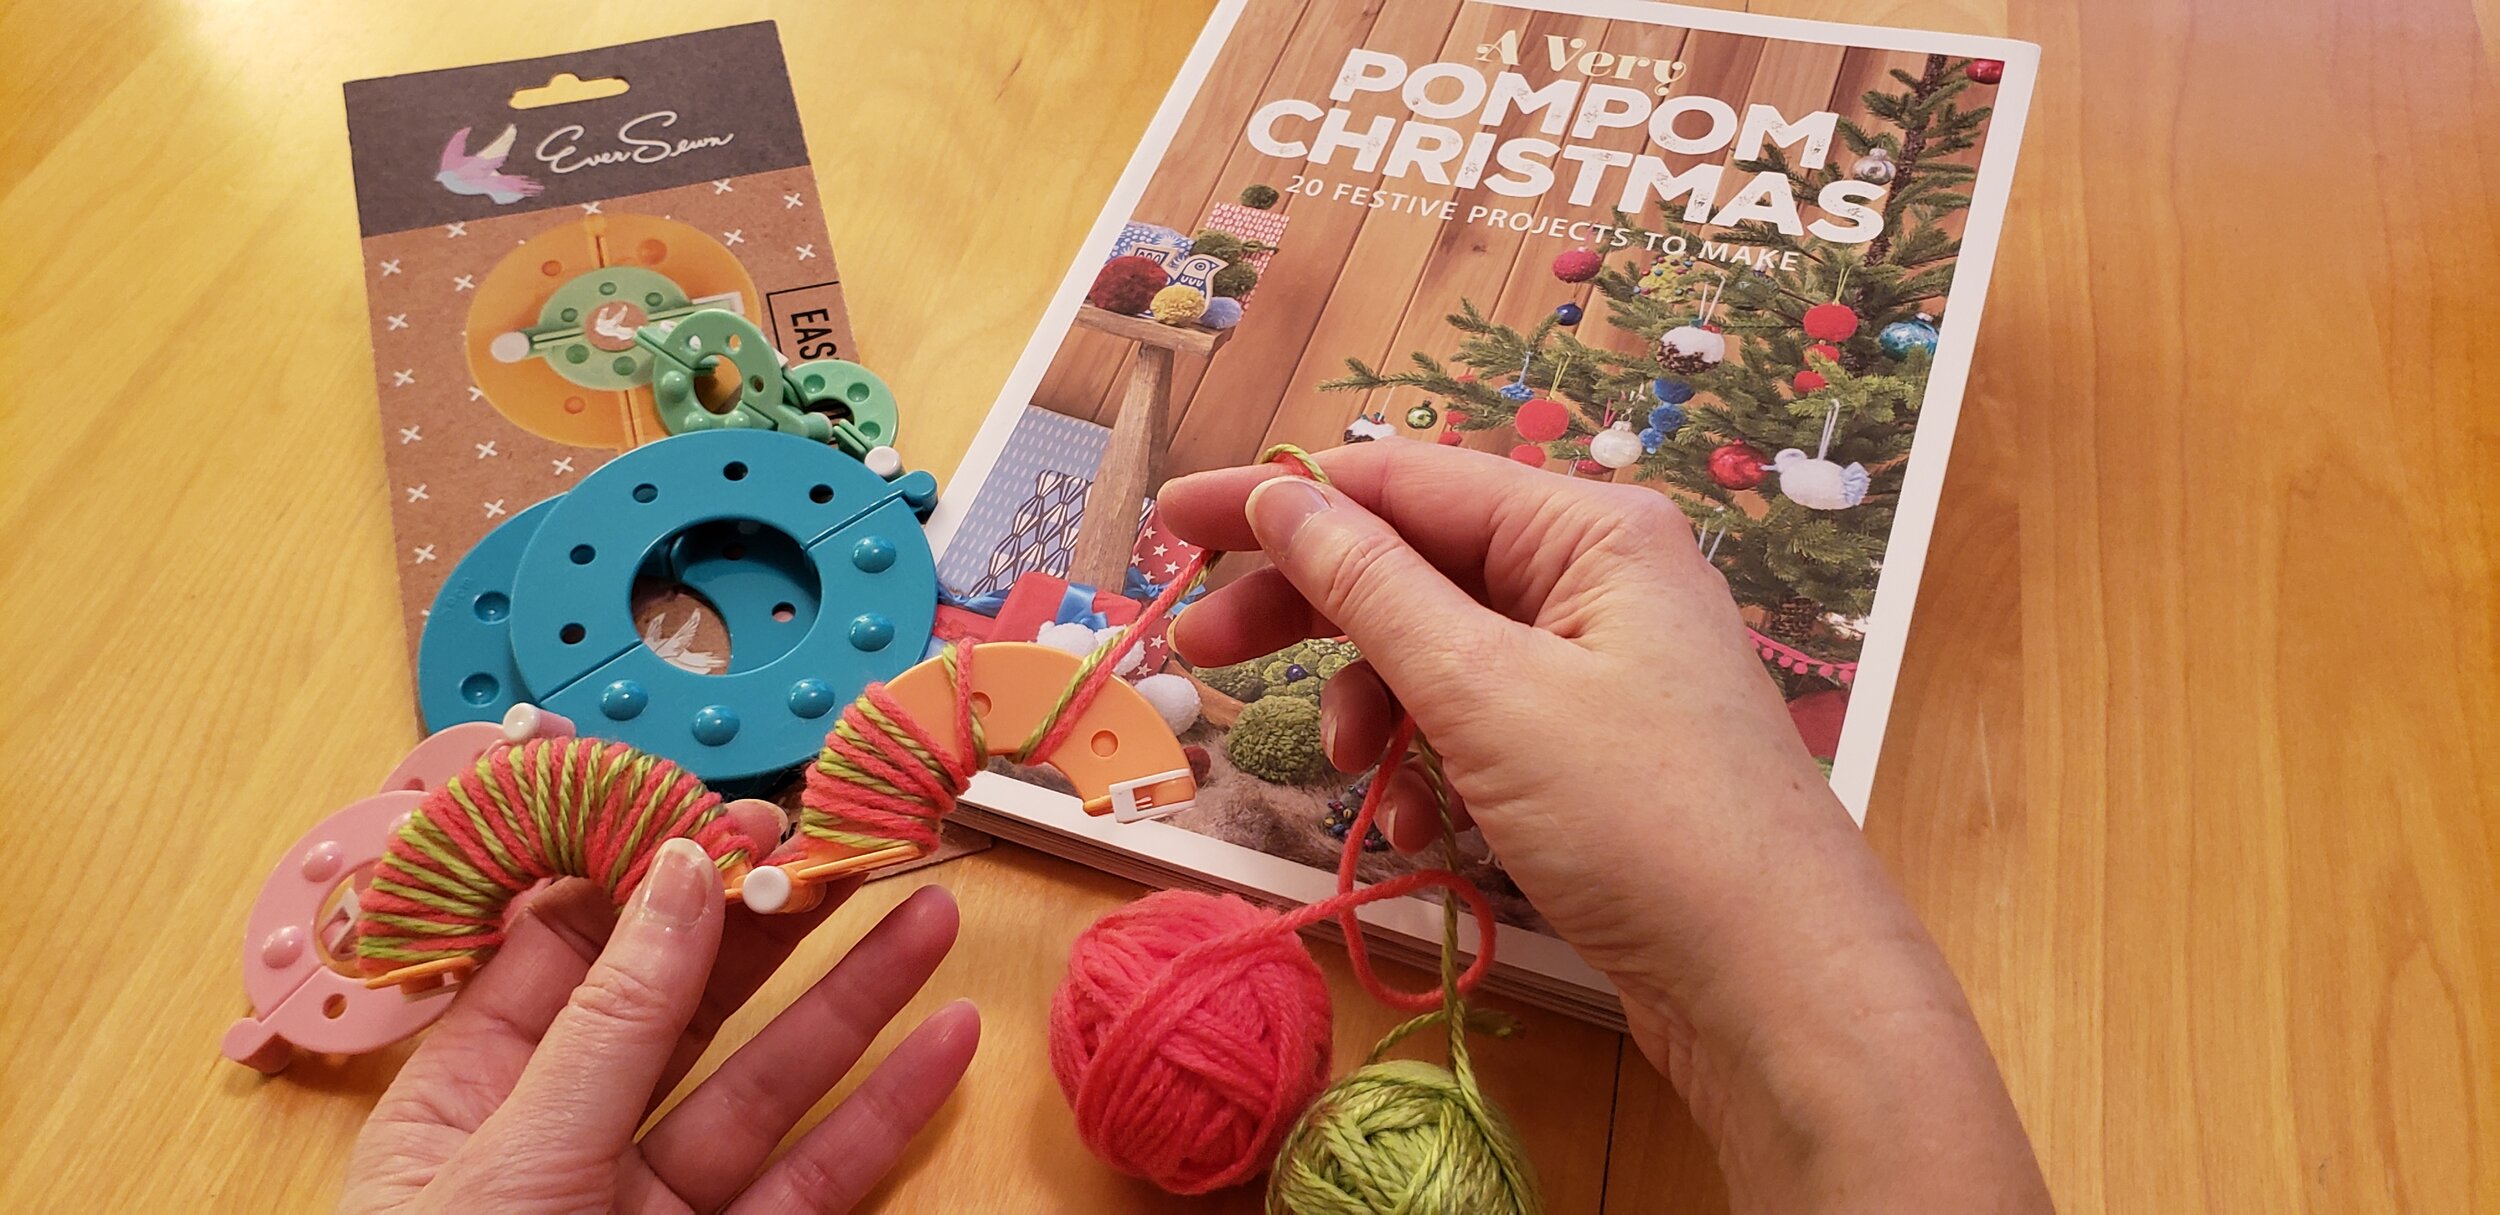 DIY Pom Pom & Tassel Gift Toppers